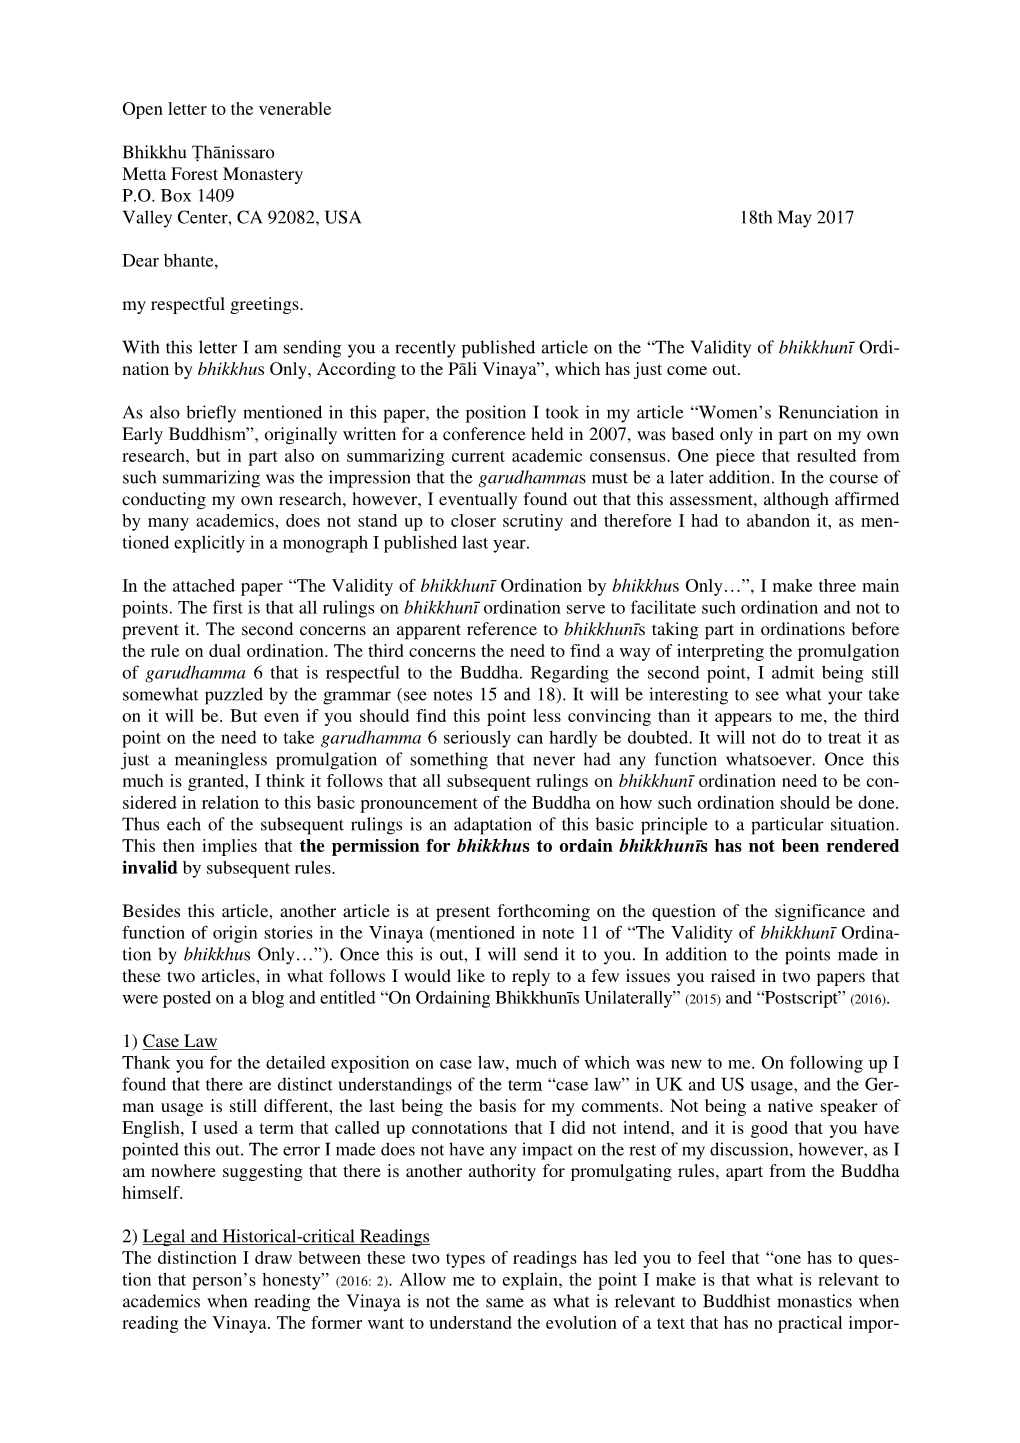 Open Letter to the Venerable Bhikkhu Hānissaro Metta Forest Monastery